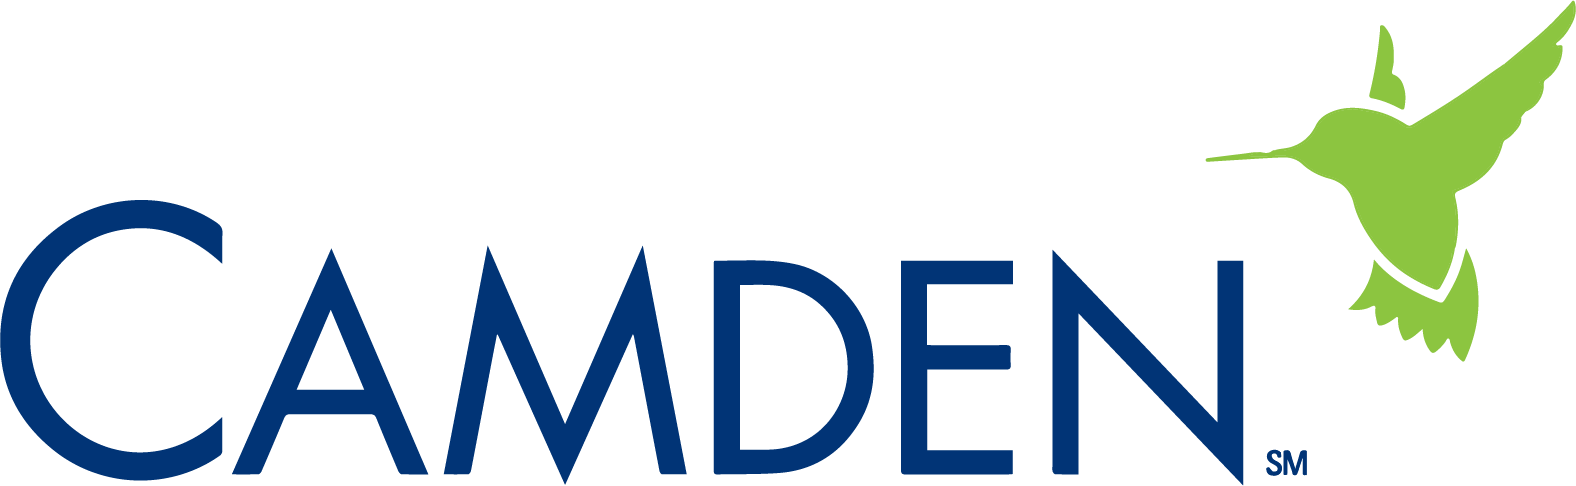 Camden Property Trust Logo png